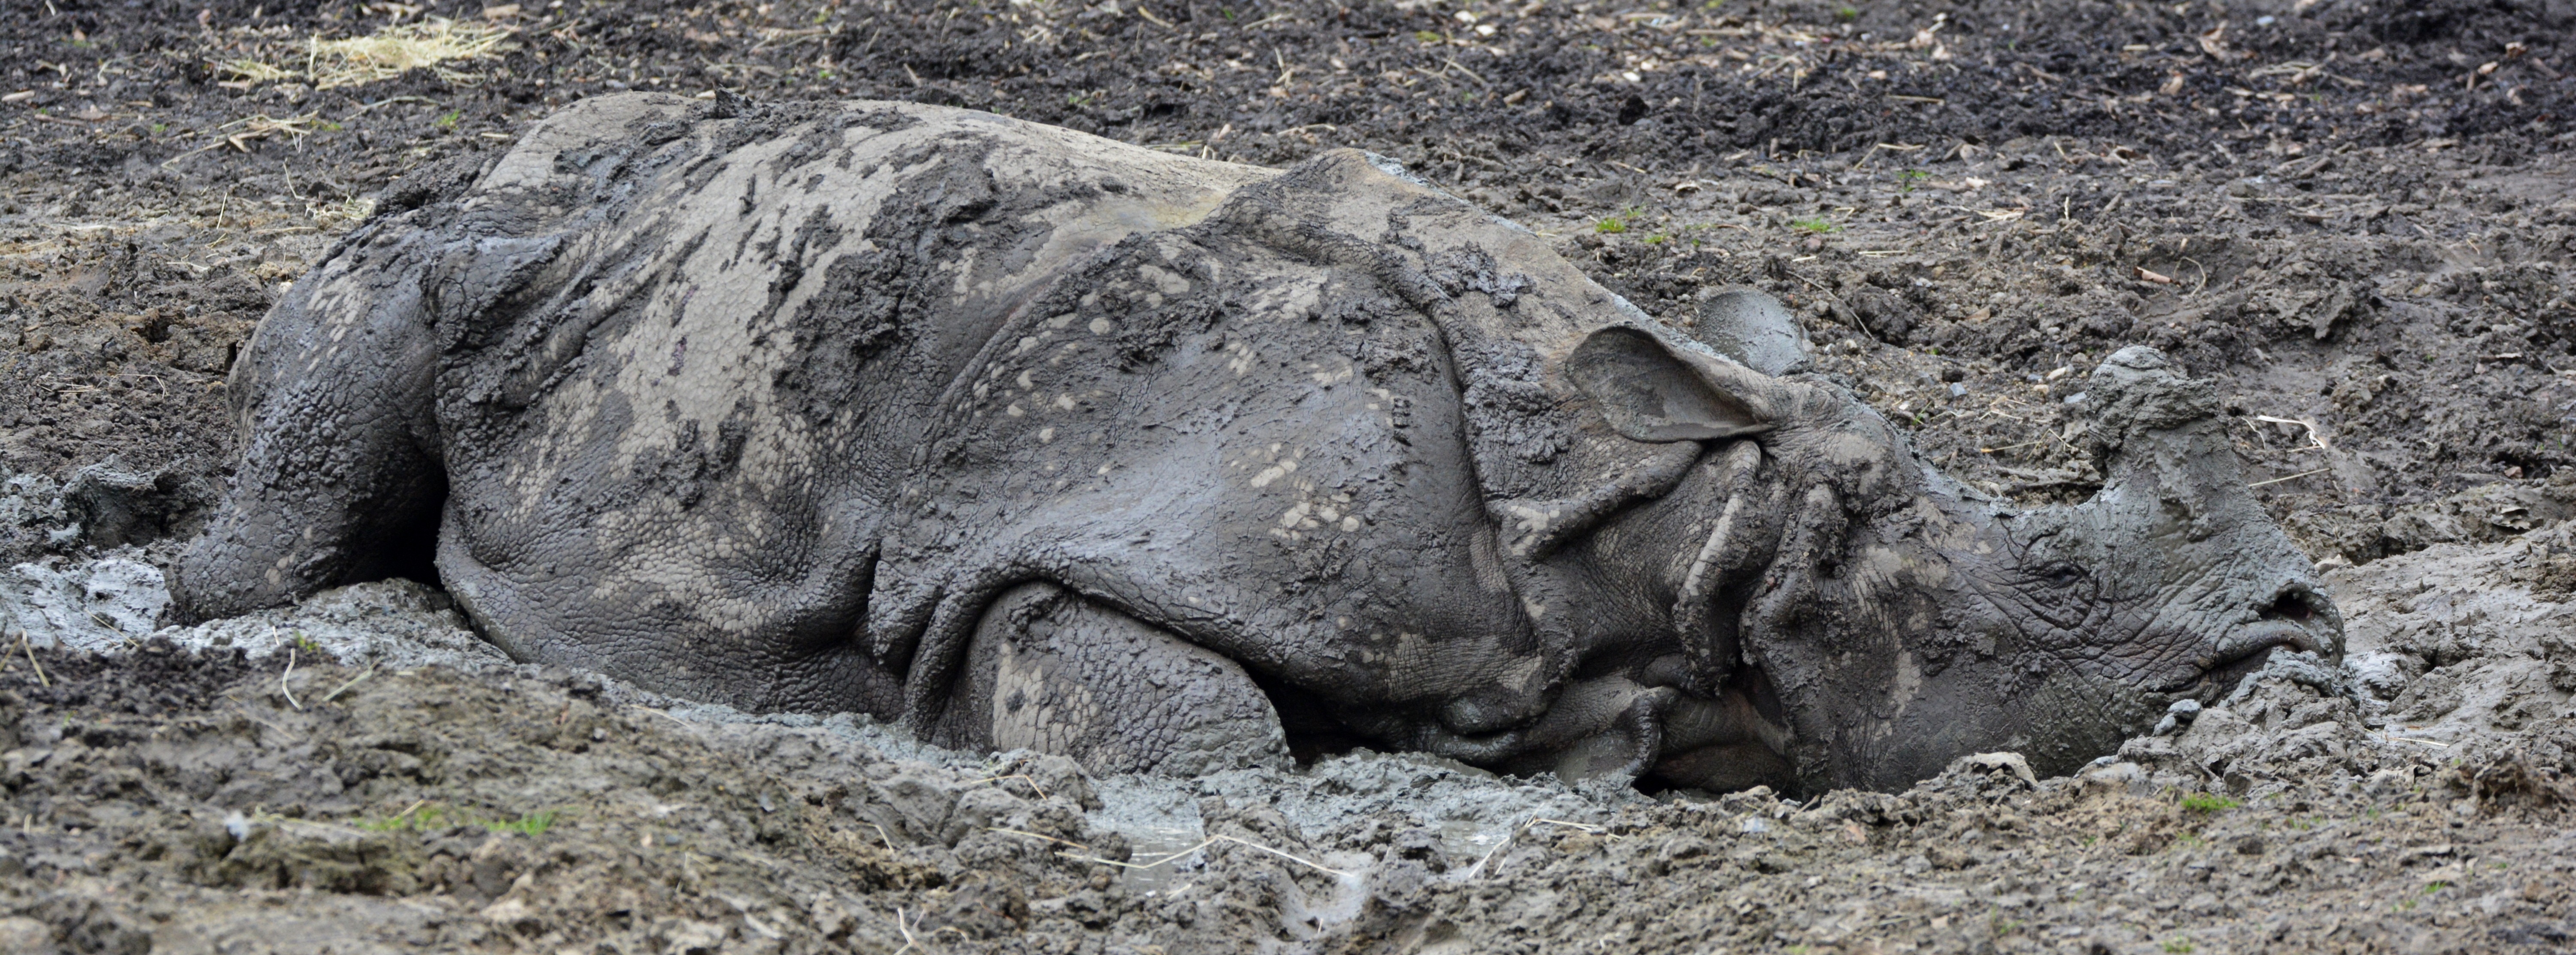 gray rhinoceros